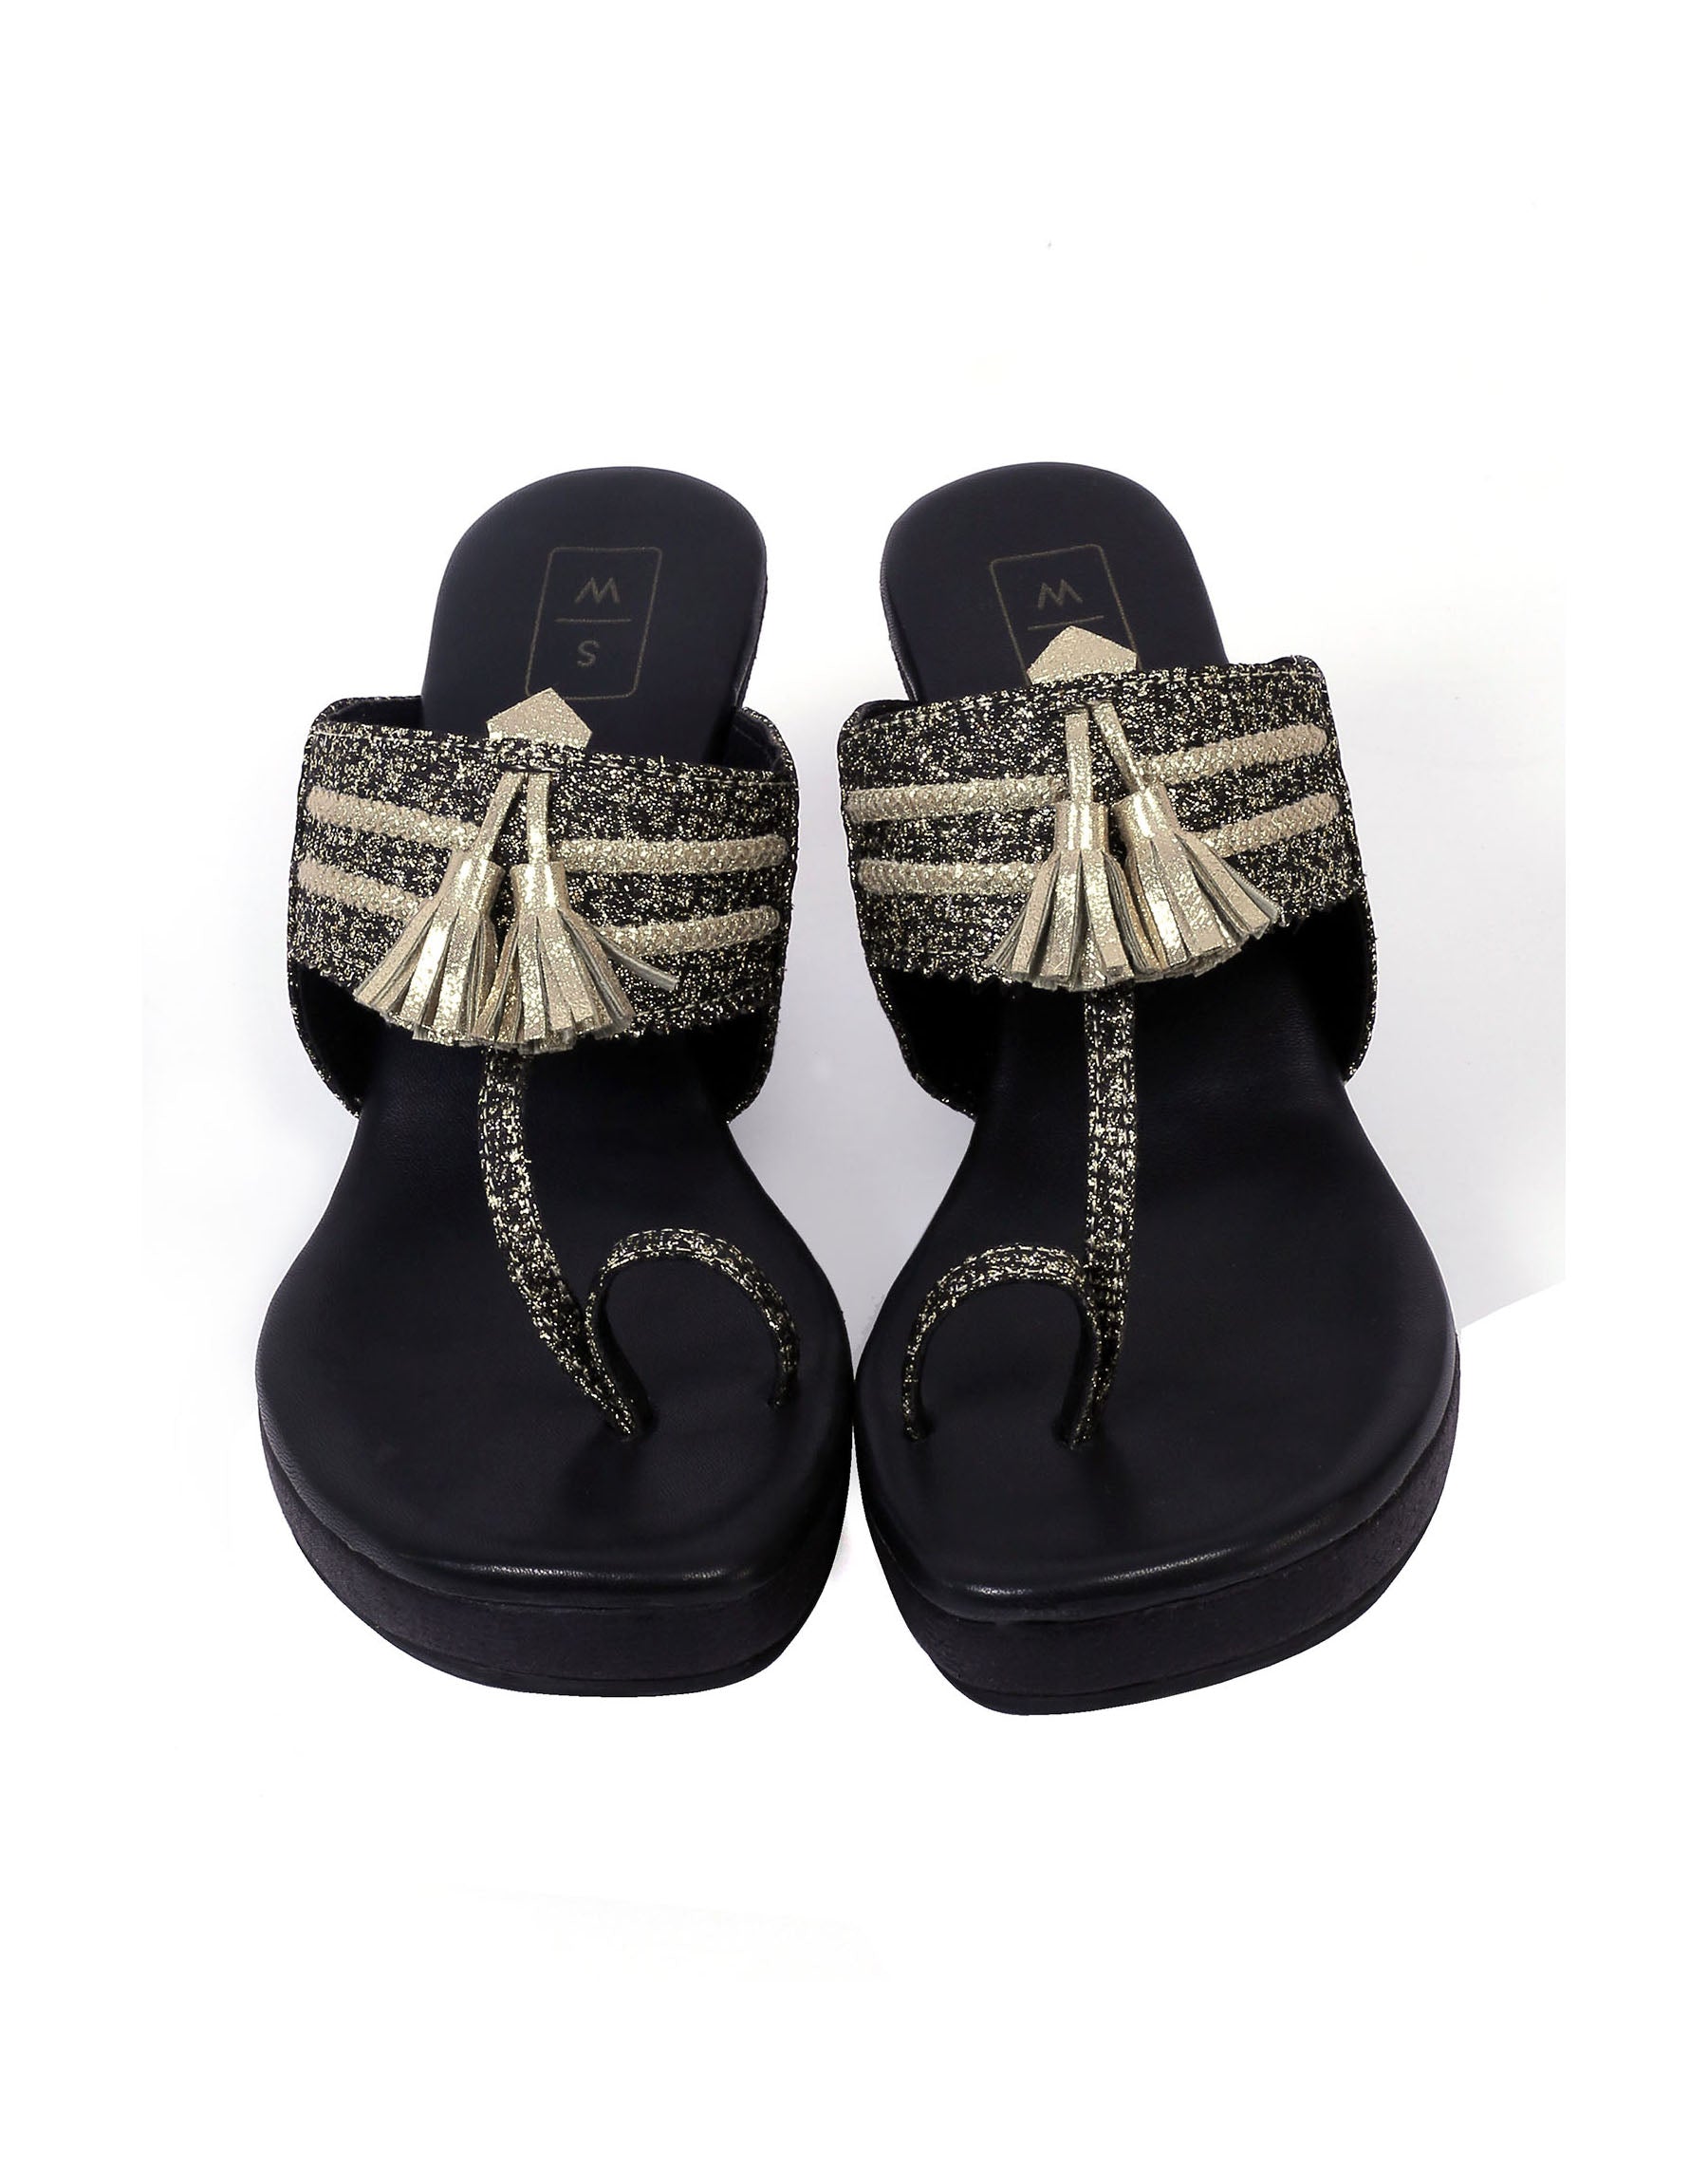 Raha Black Wedge Sandals